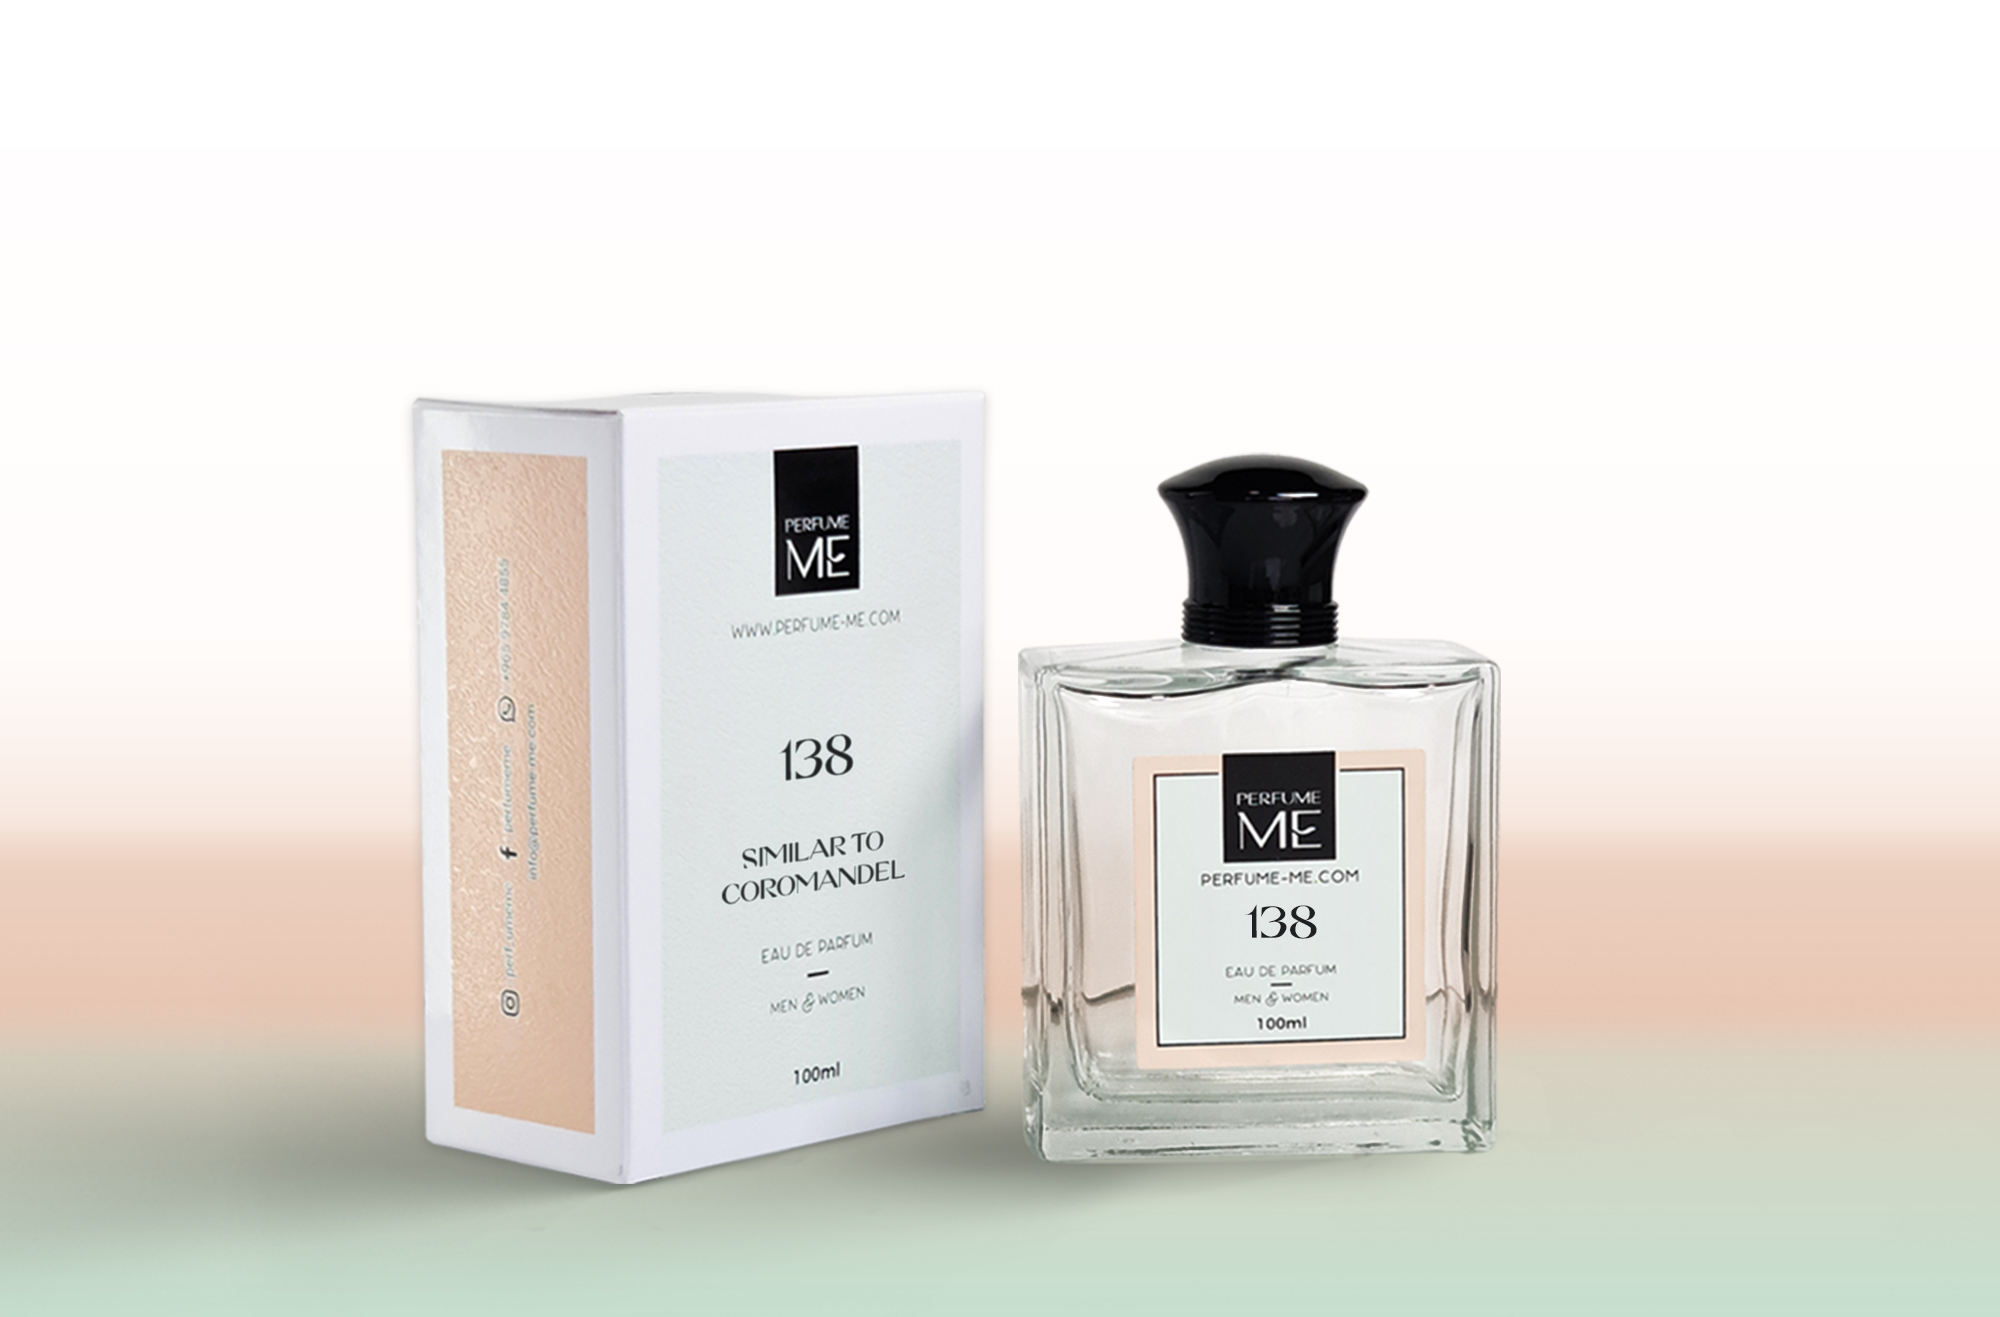 CHANEL COROMANDEL PARFUM Review, Perfume, Fragrance